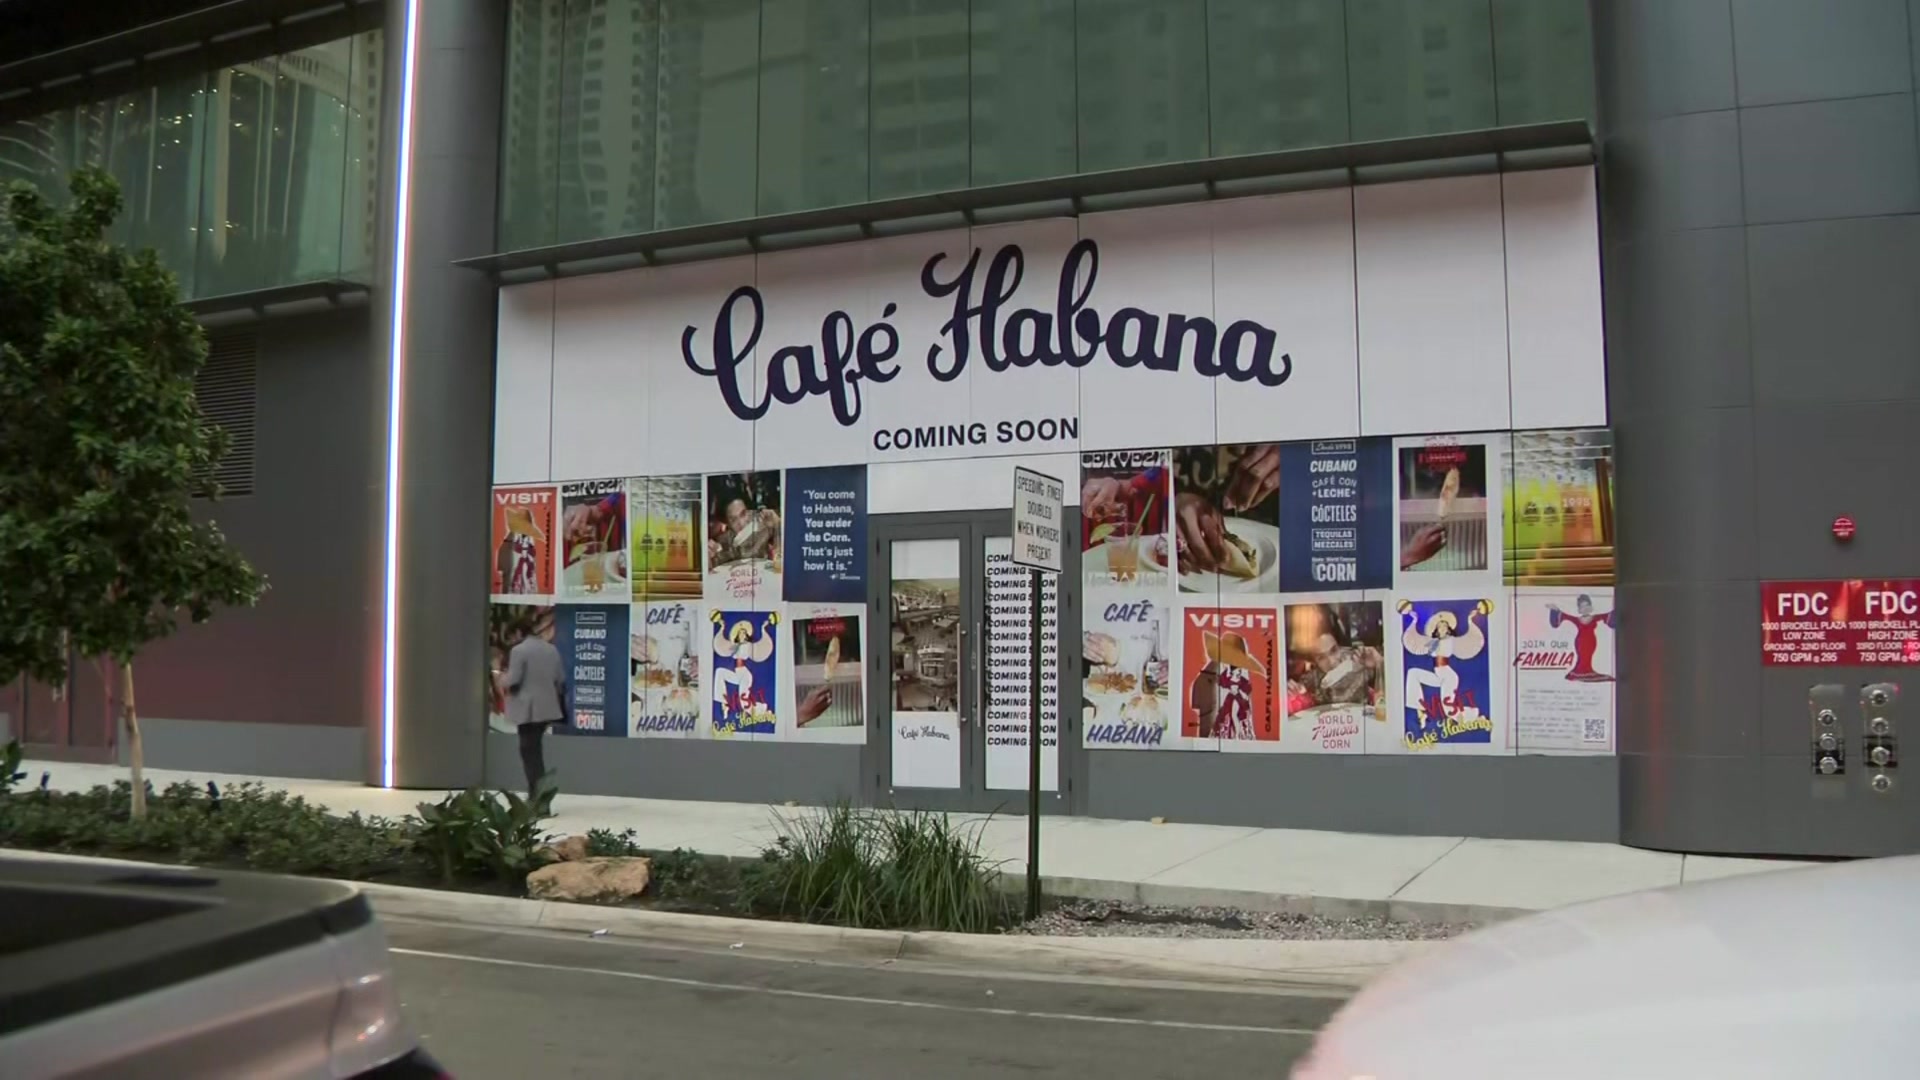 No Appetite For New Miami Restaurant Glorifying Castro, Communism